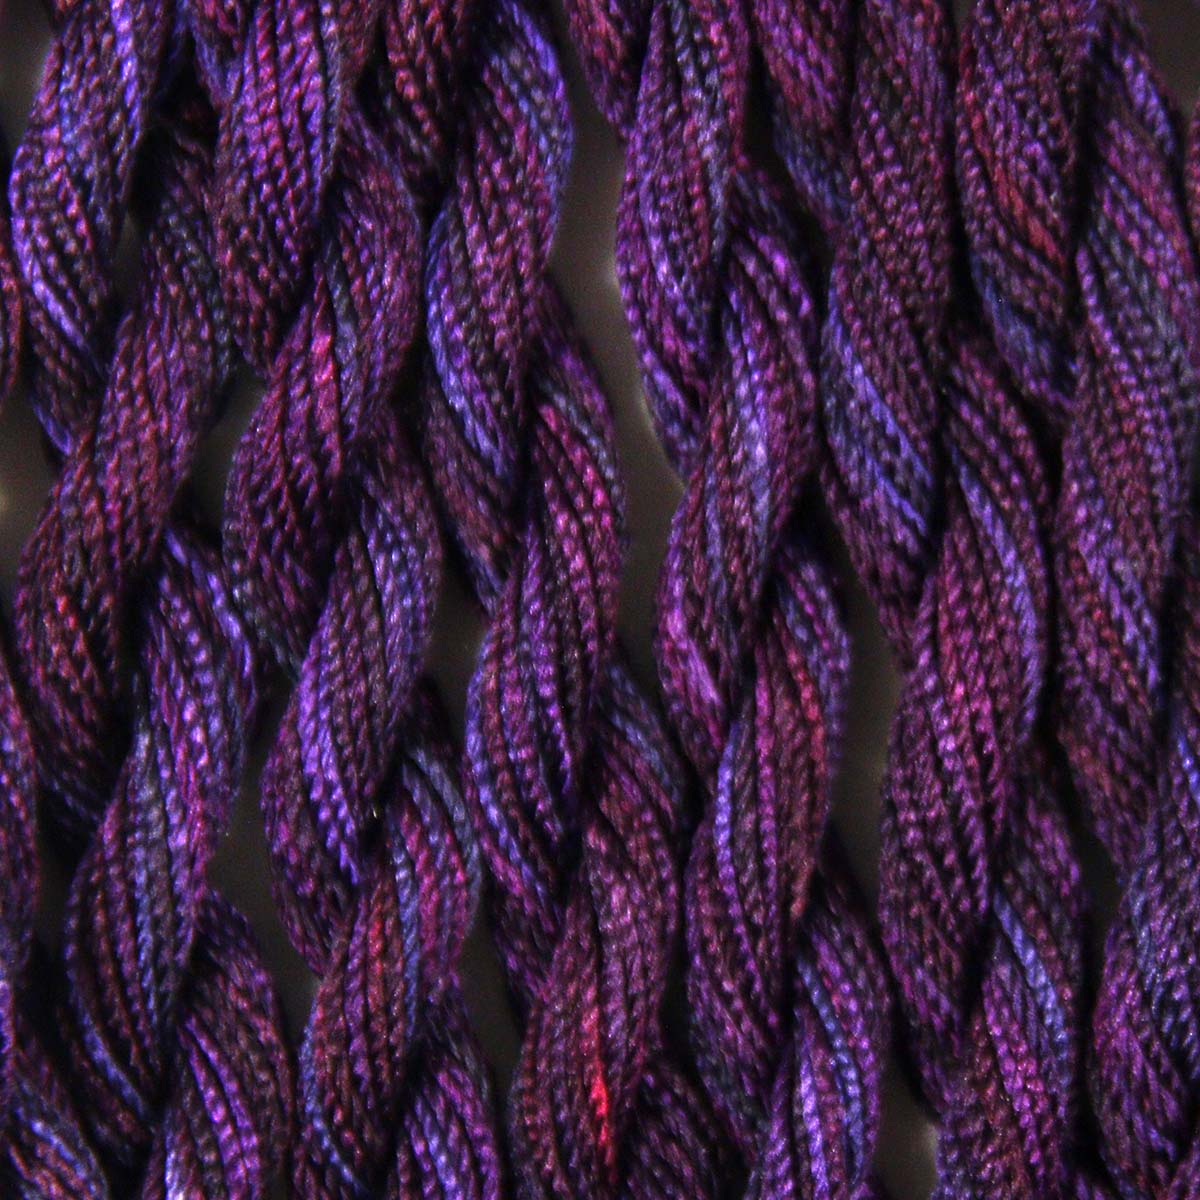 www.colourstreams.com.au Colour Streams Hand Dyed Silk Threads Silken Strands Ophir Exotic Lights Aurora Slow Stitch Embroidery Textile Arts Fibre DL 59 Royal Grape Purples